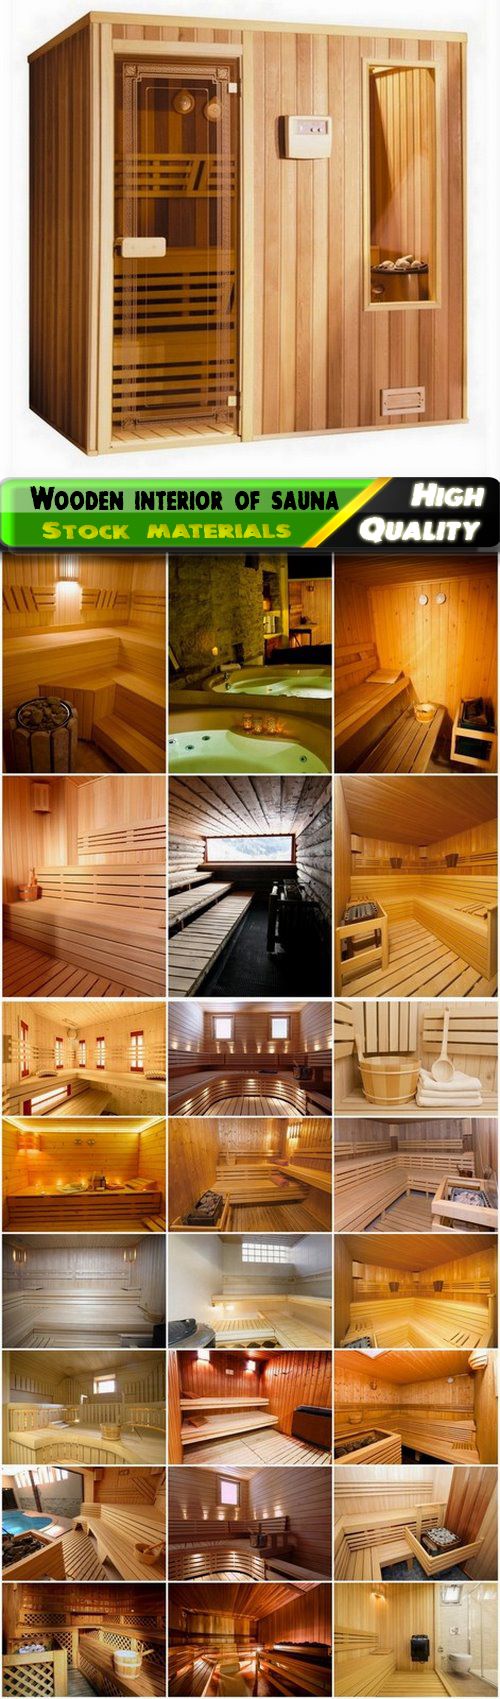 Wooden interior of sauna and bath - 25 HQ Jpg